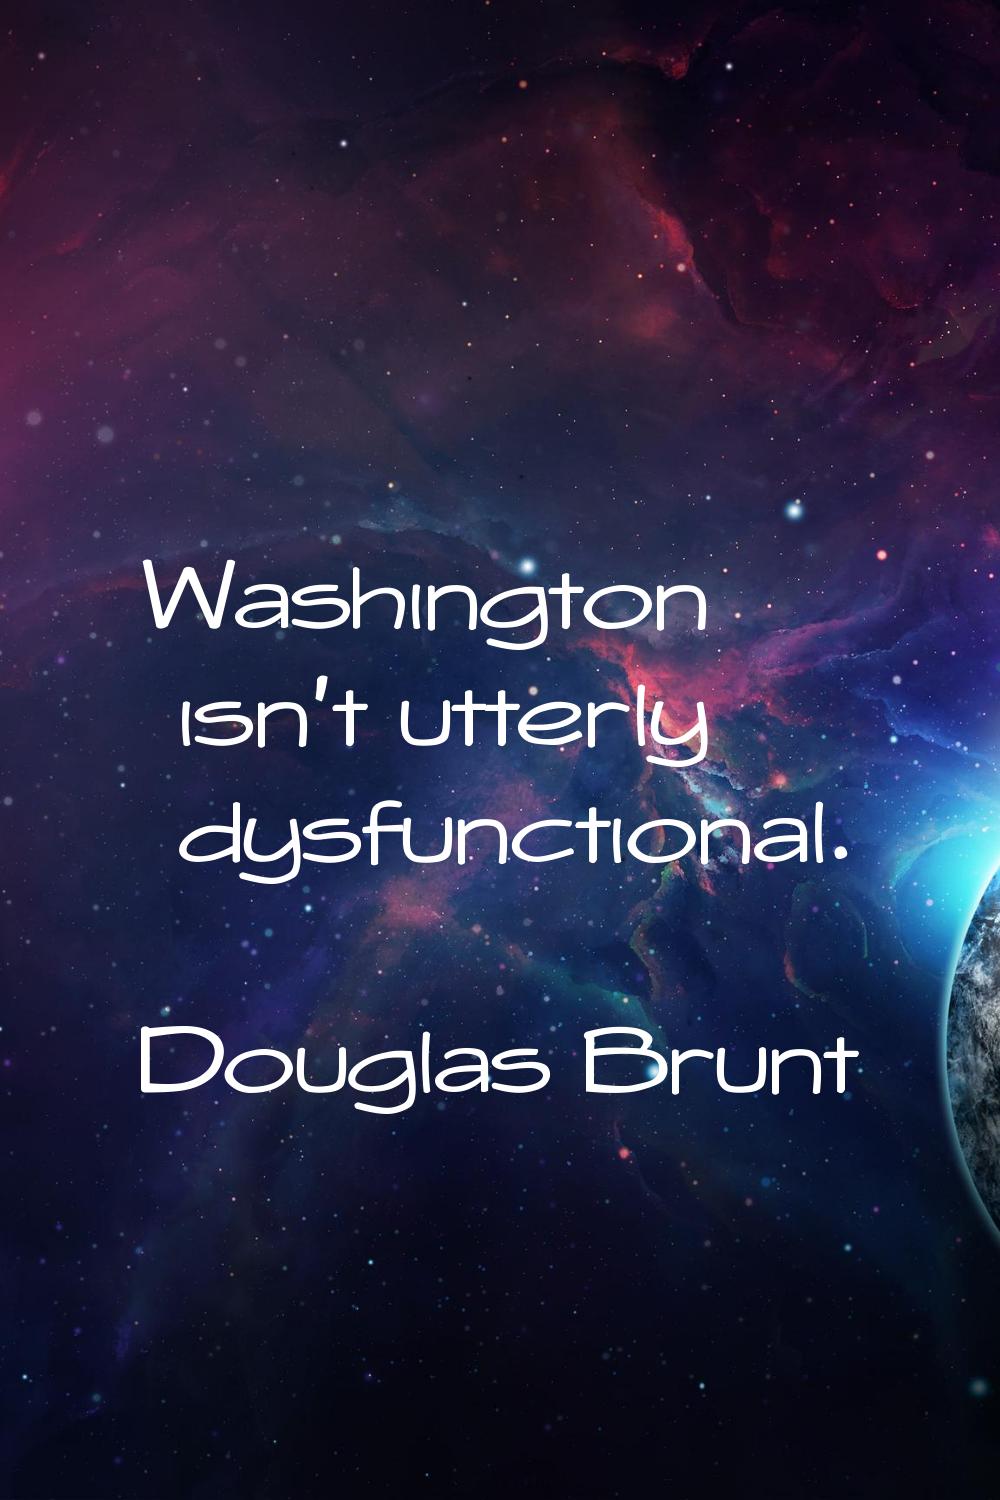 Washington isn't utterly dysfunctional.